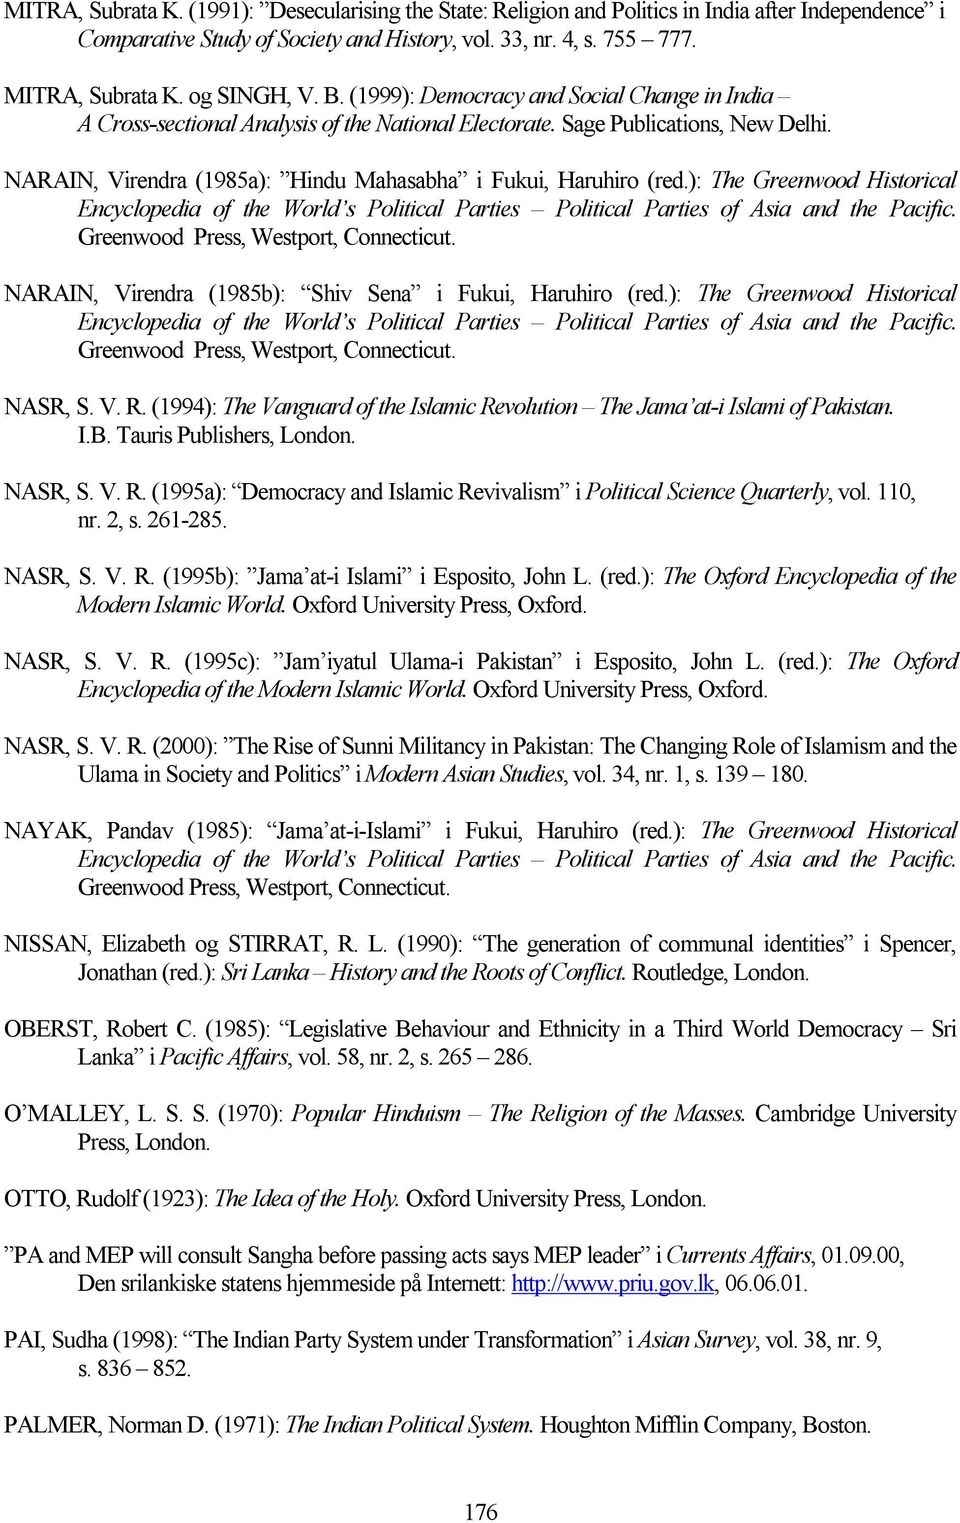 NARAIN, Virendra (1985a): Hindu Mahasabha i Fukui, Haruhiro (red.): The Greenwood Historical Encyclopedia of the World s Political Parties Political Parties of Asia and the Pacific.